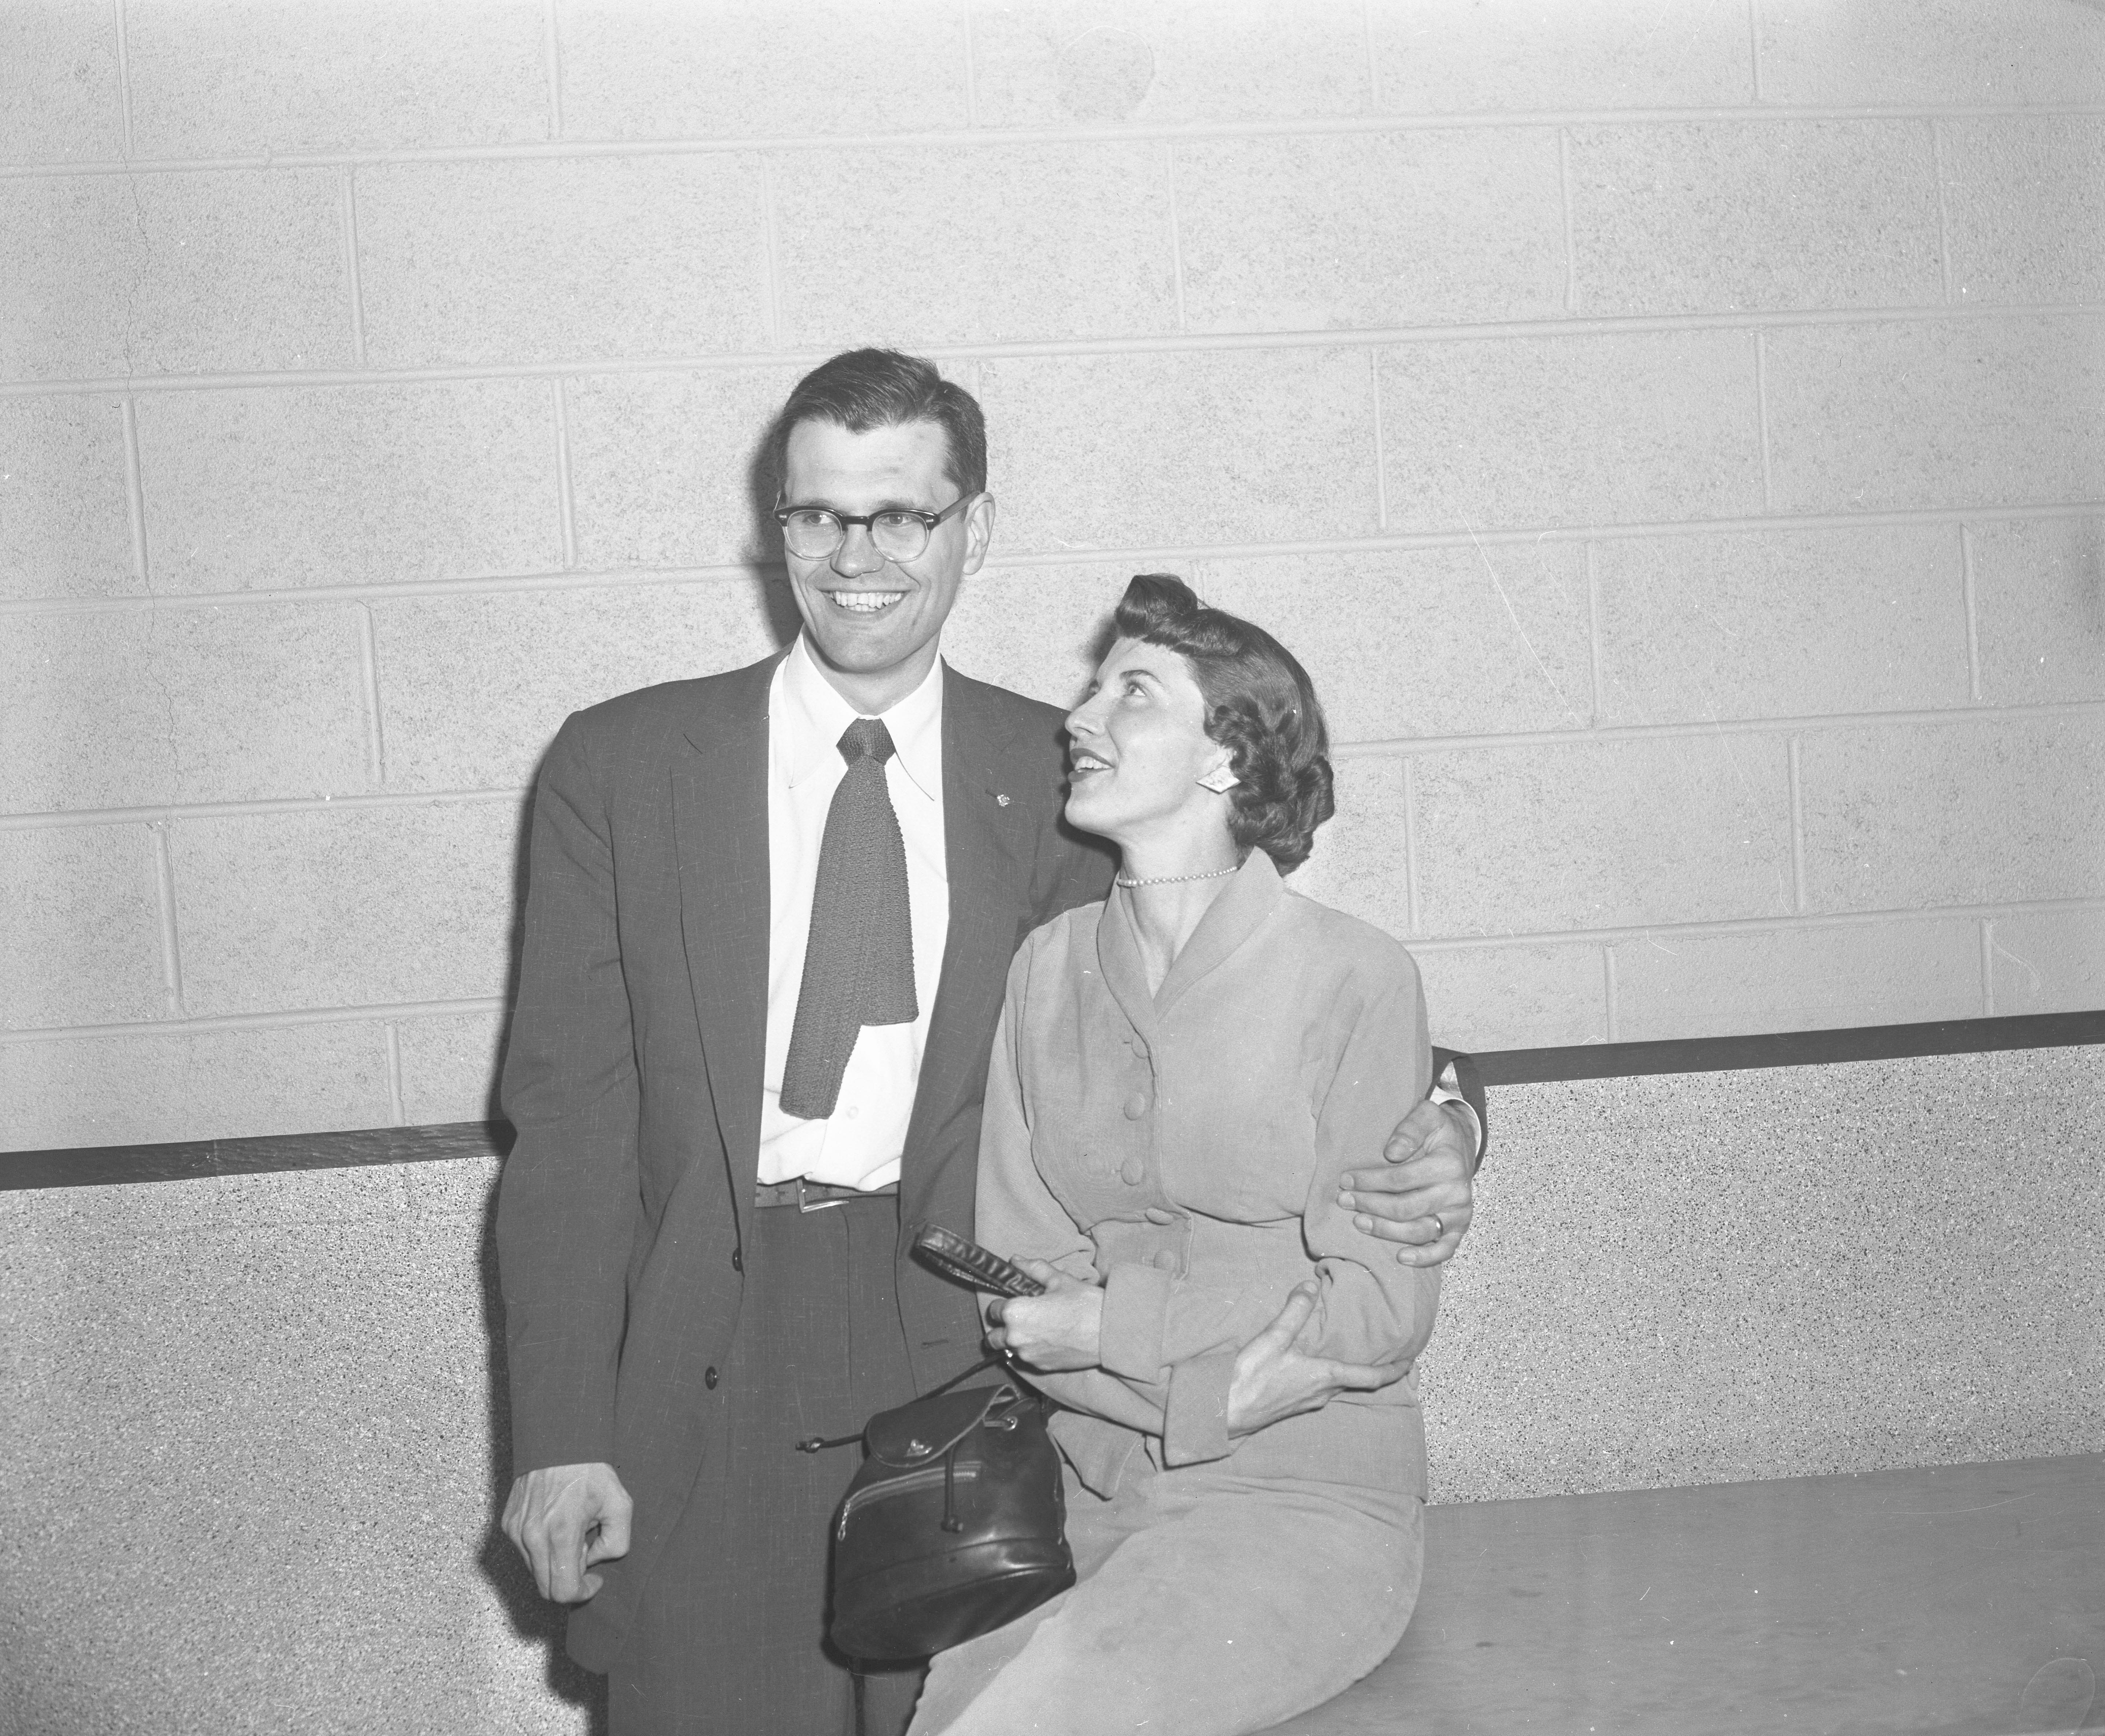 After serving as an Army lieutenant in World war II, John Jr. earned a law degree. 
In 1952, he married Helen Henebry, whom he met when he worked summers as a National Park Ranger in Colorado.